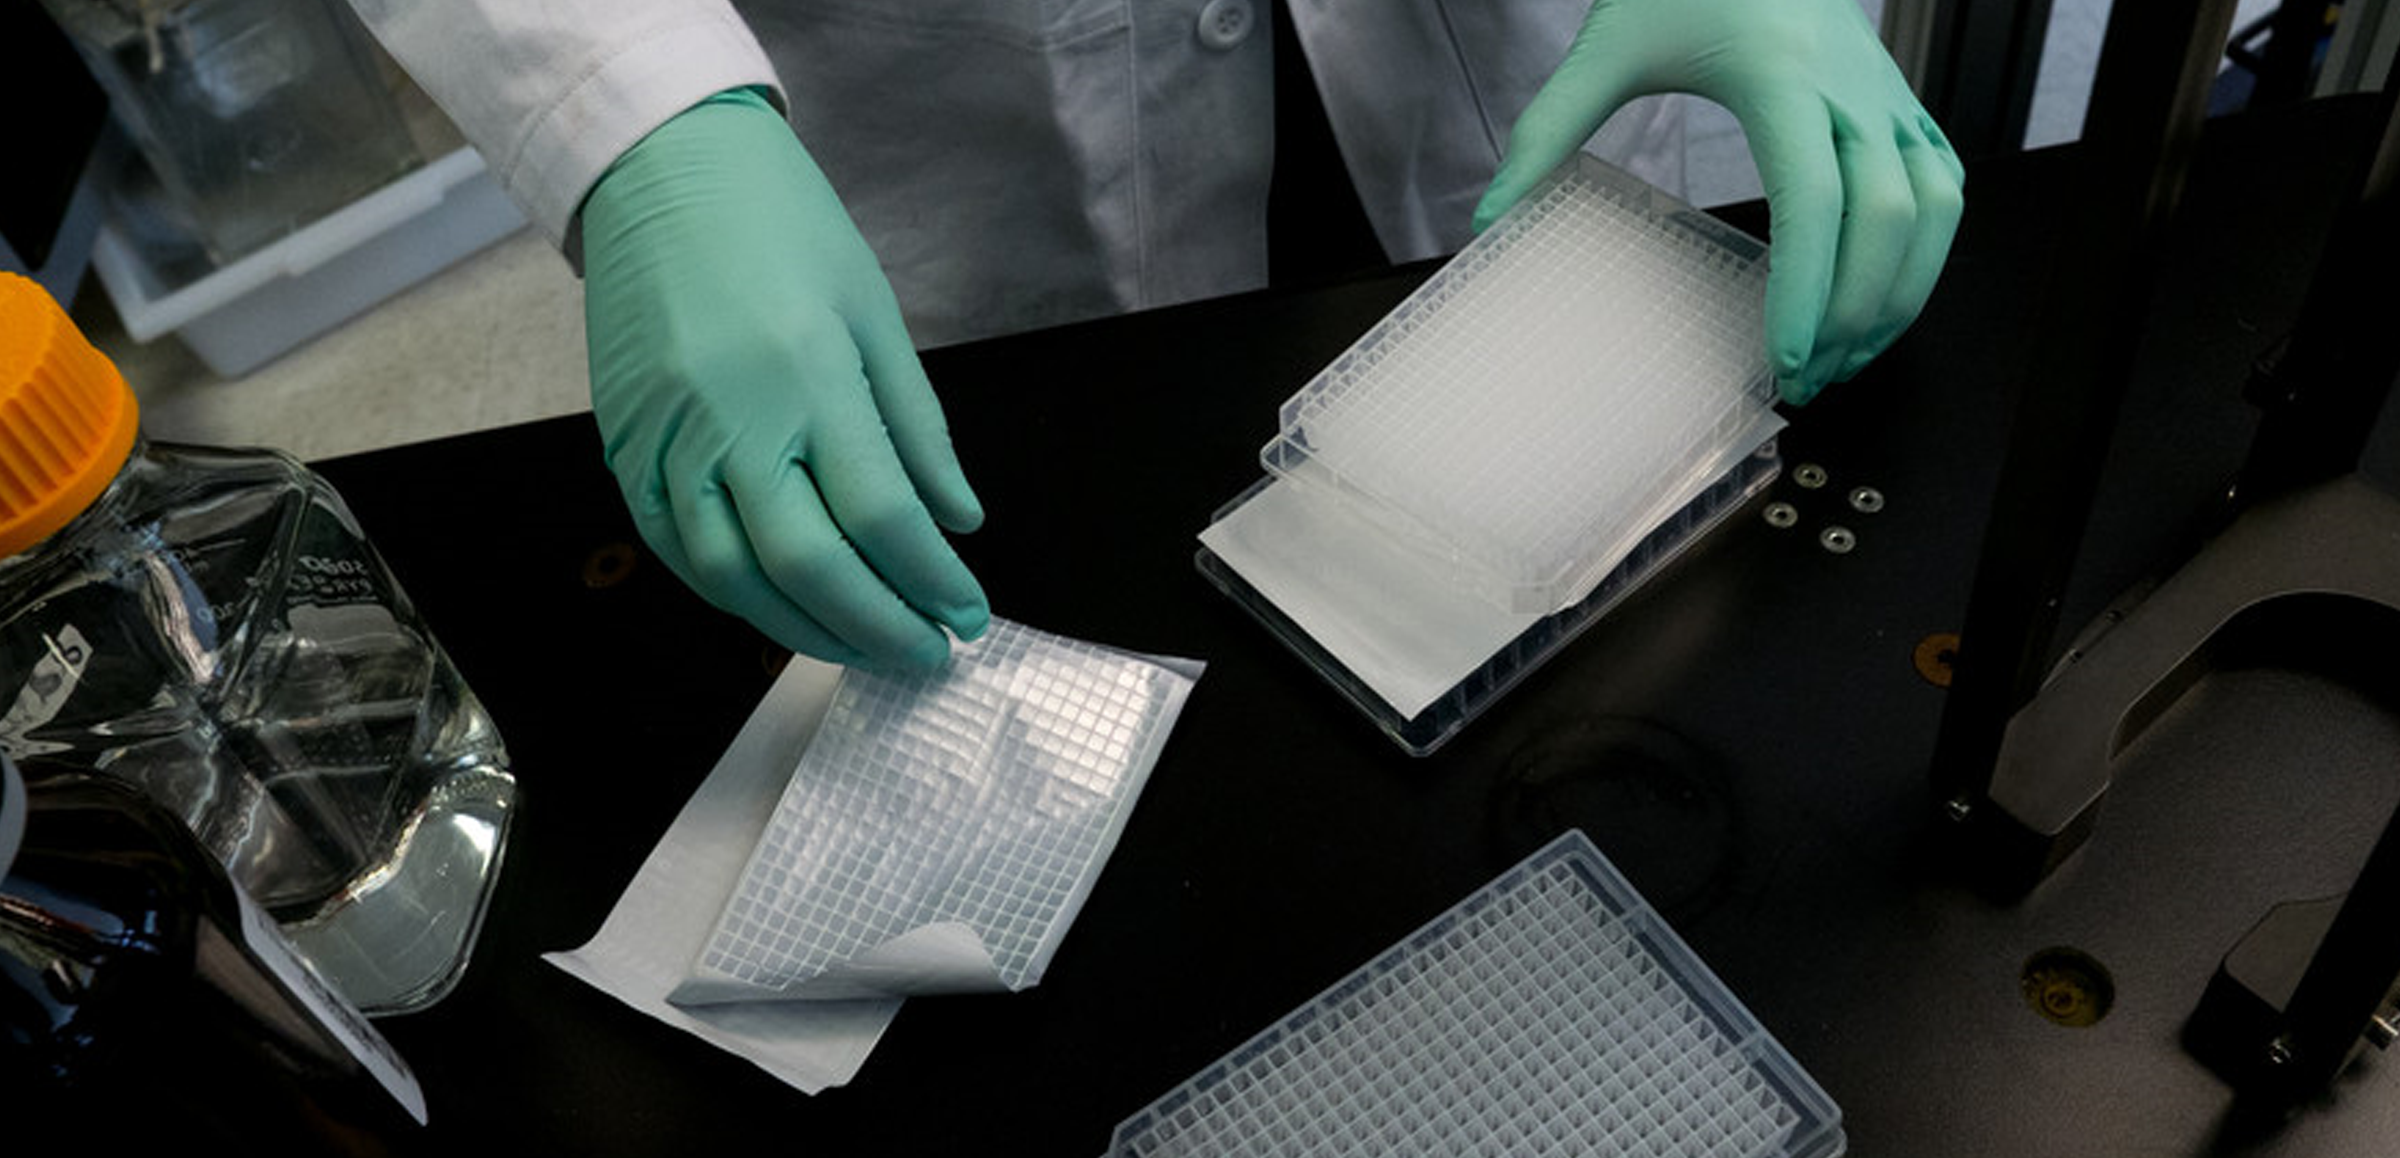 Scientist preparing samples in a laboratory